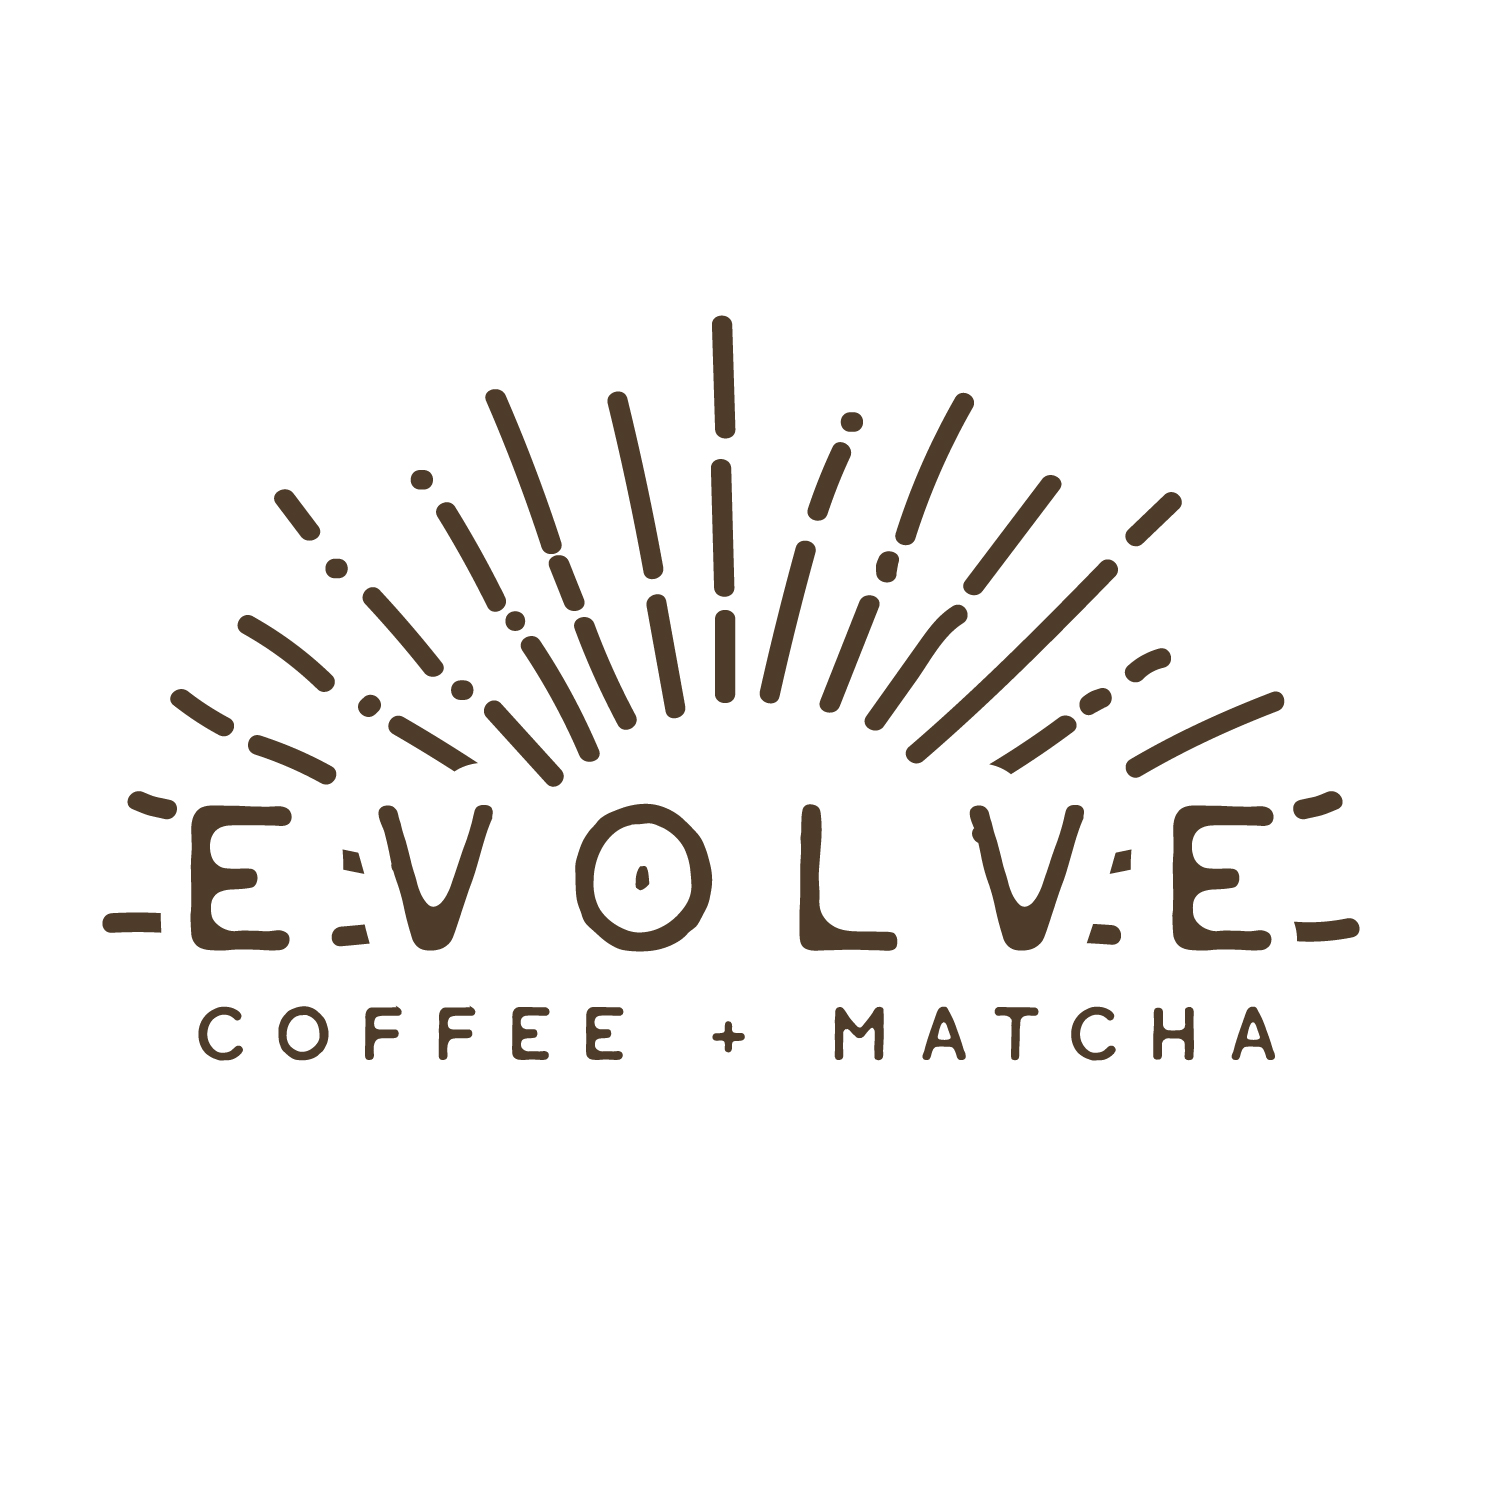 EVOLVE COFFEE + Matcha